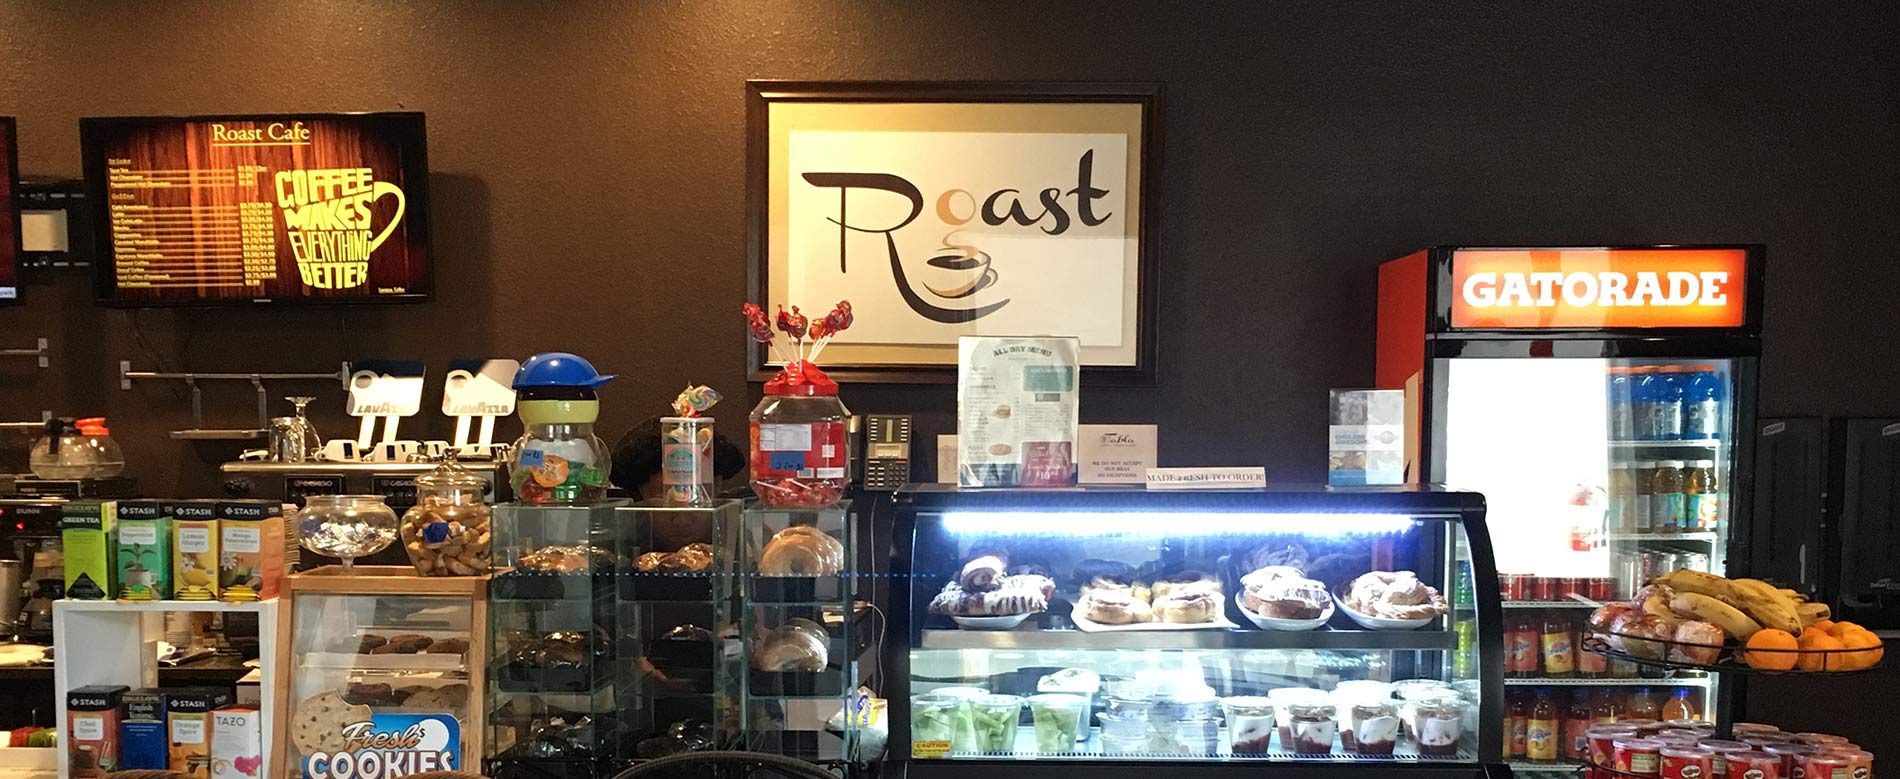 roast cafe